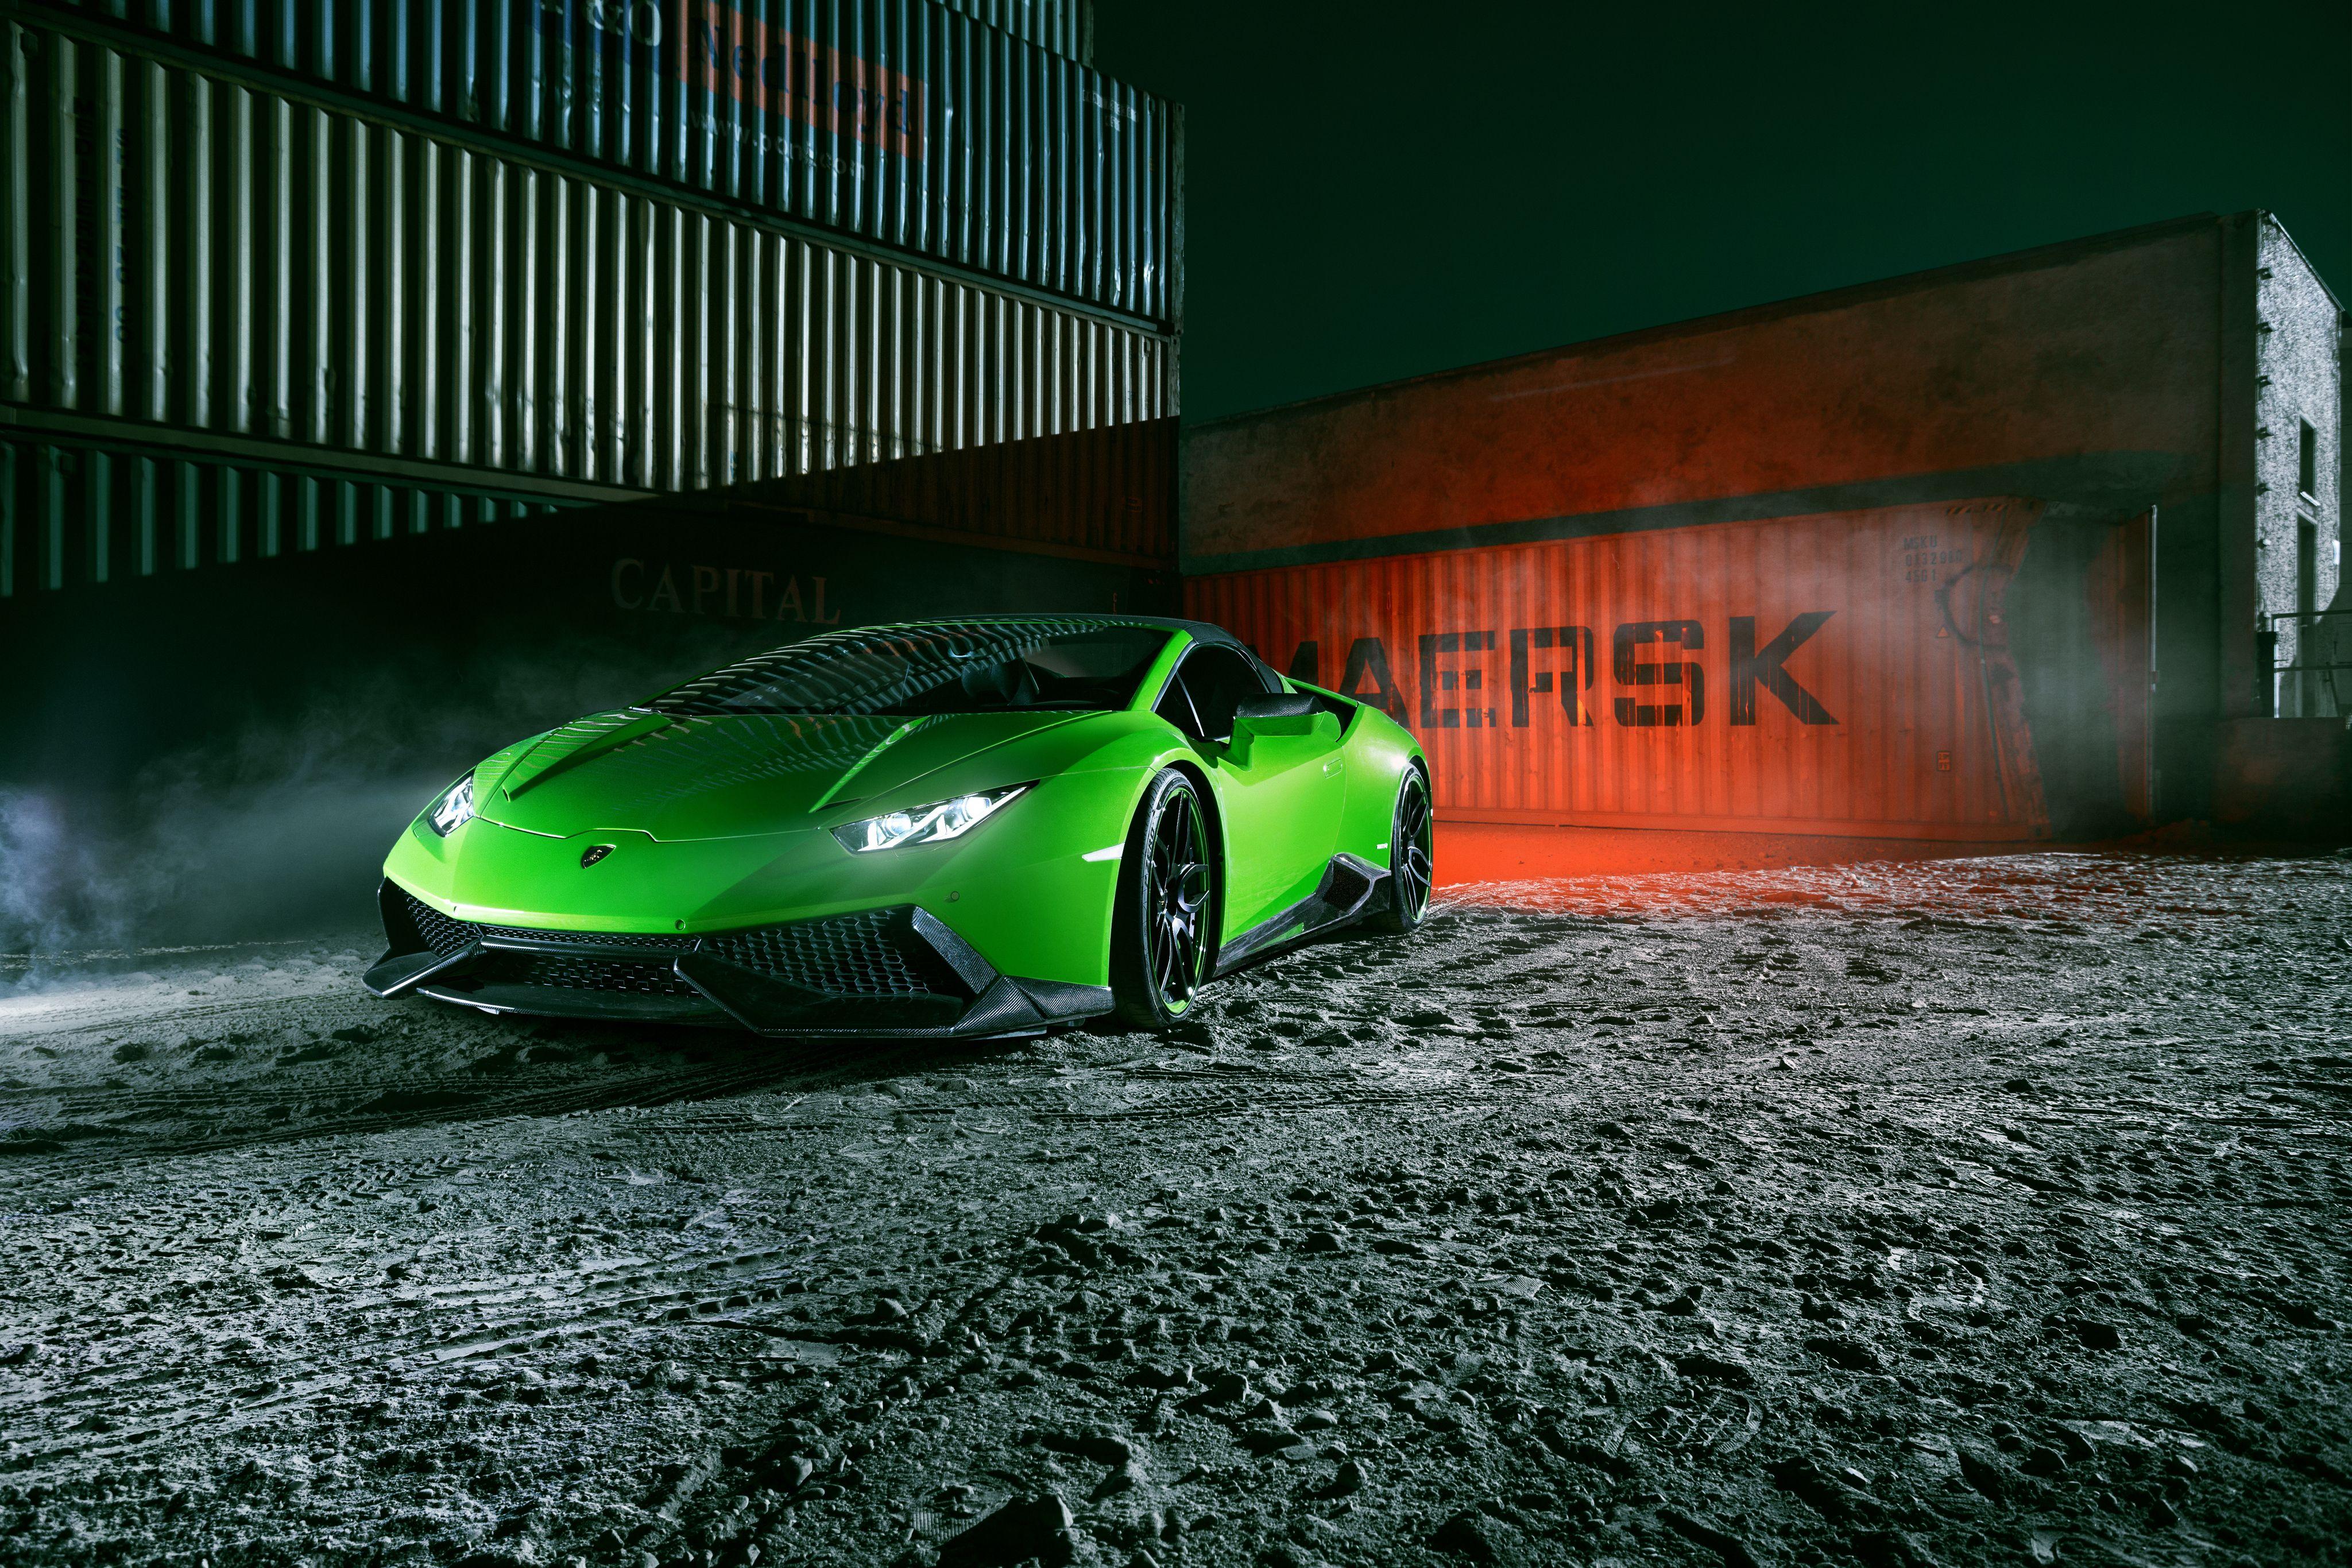 Lamborghini Green Car Hd 4k Wallpapers Wallpaper Cave